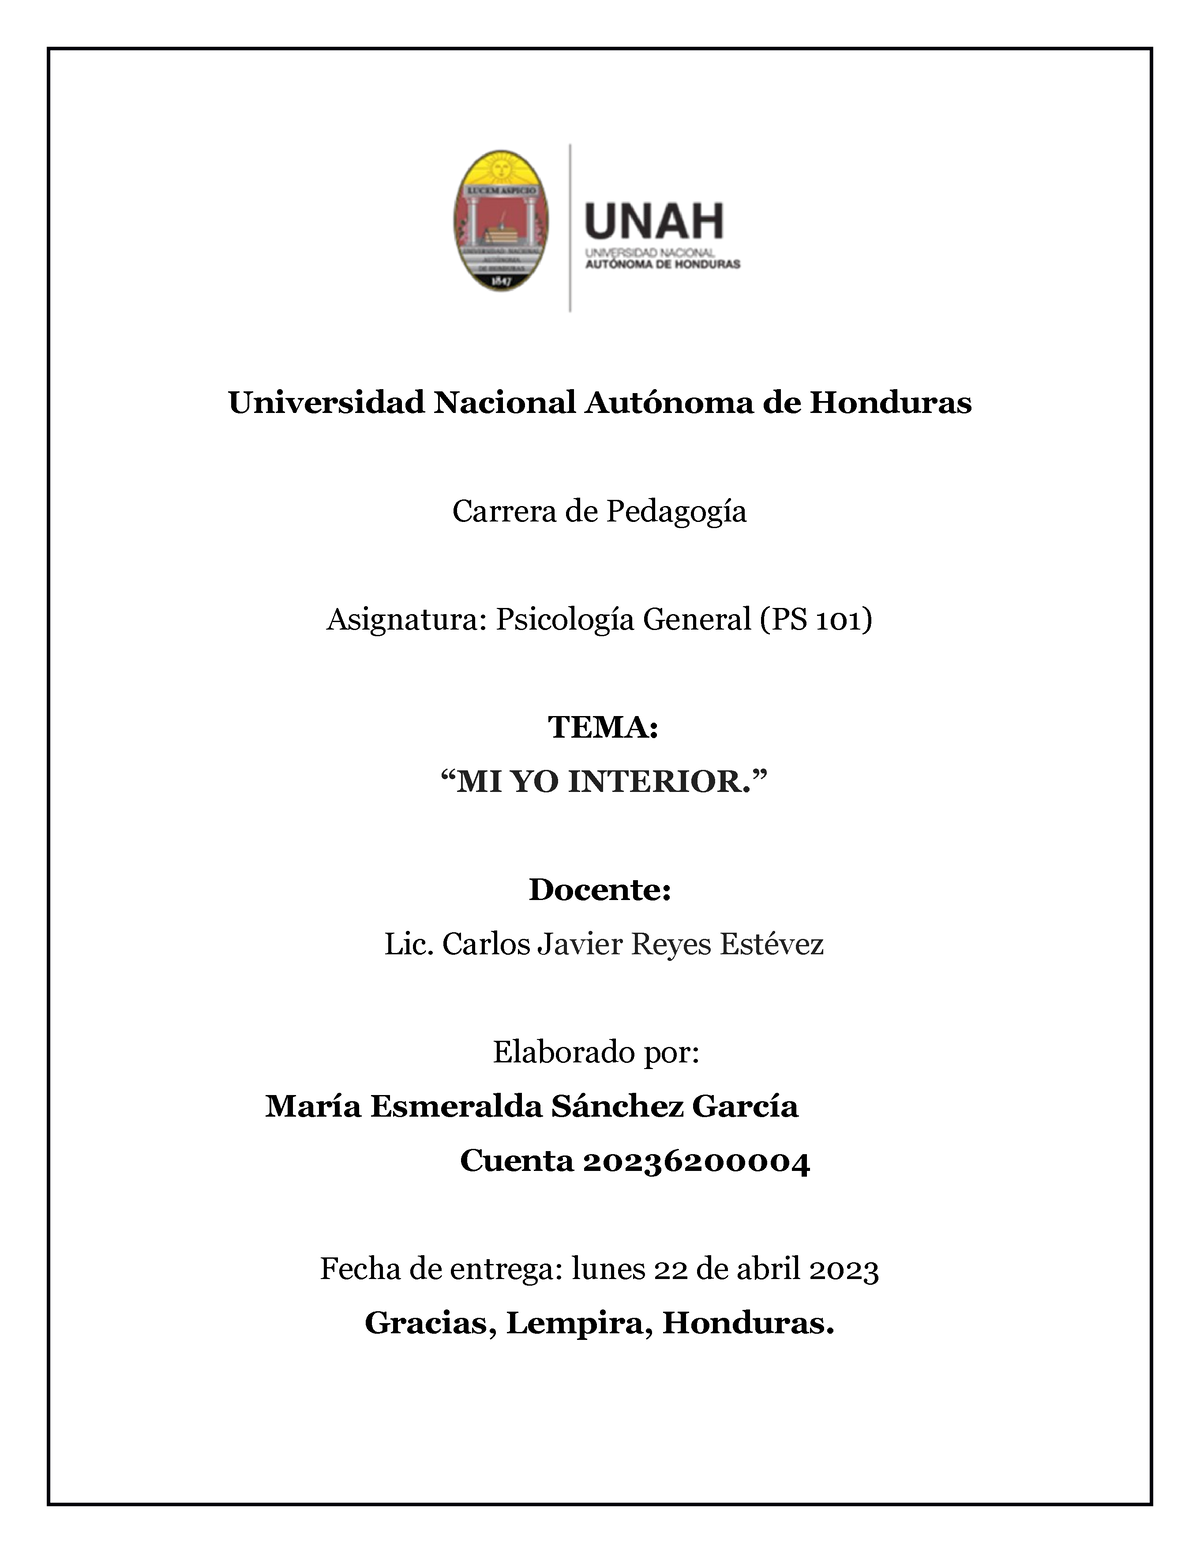 Sanchez Garcia Maria Esmeralda U7T1a1 - Psicologia - UNAH - Studocu